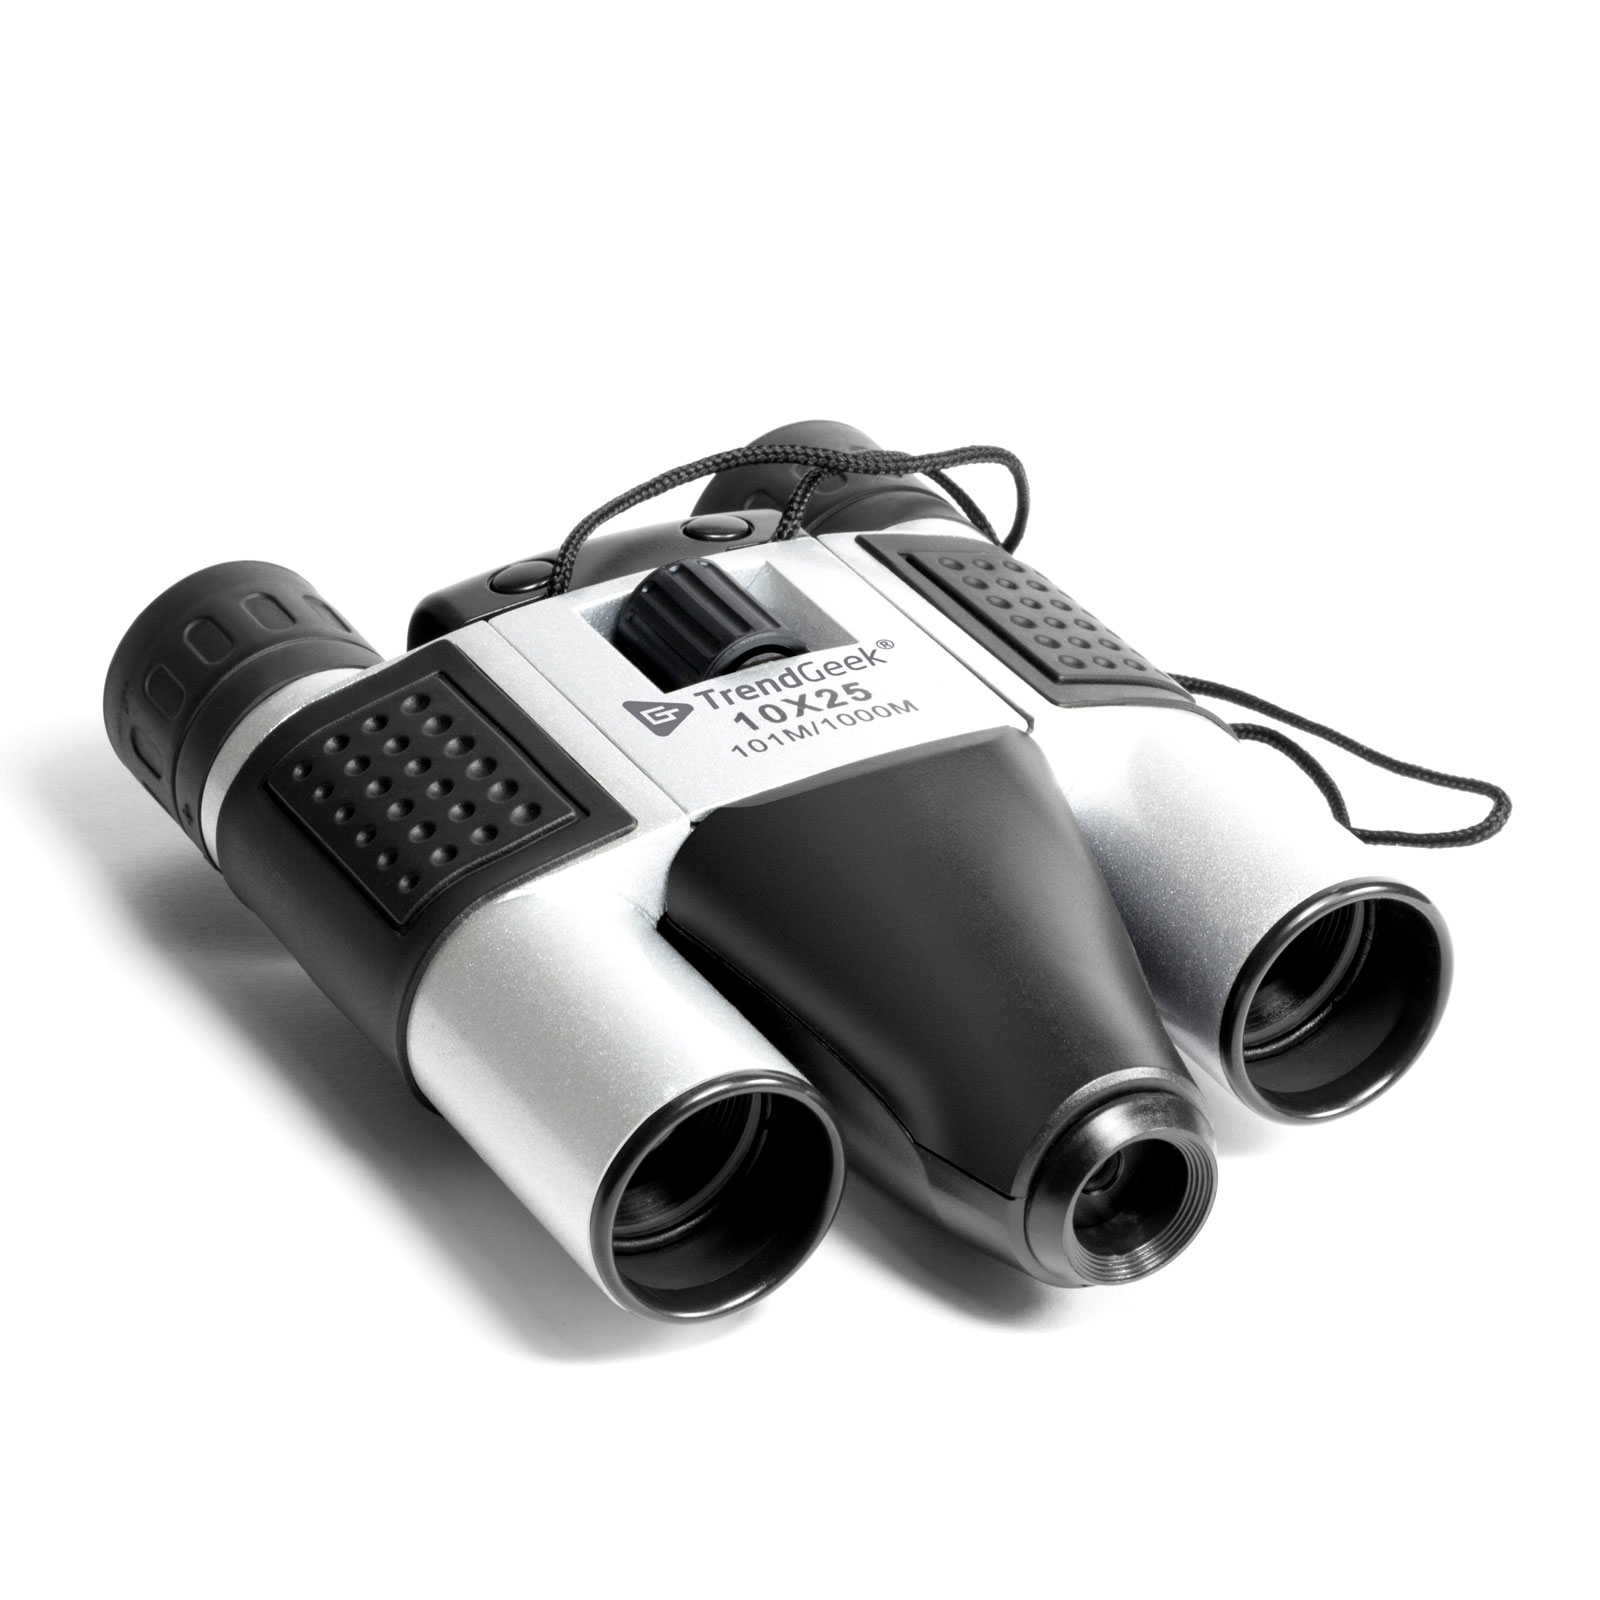 Technaxx TrendGeek TG-125 Fernglas mit integrierter Digitalkamera